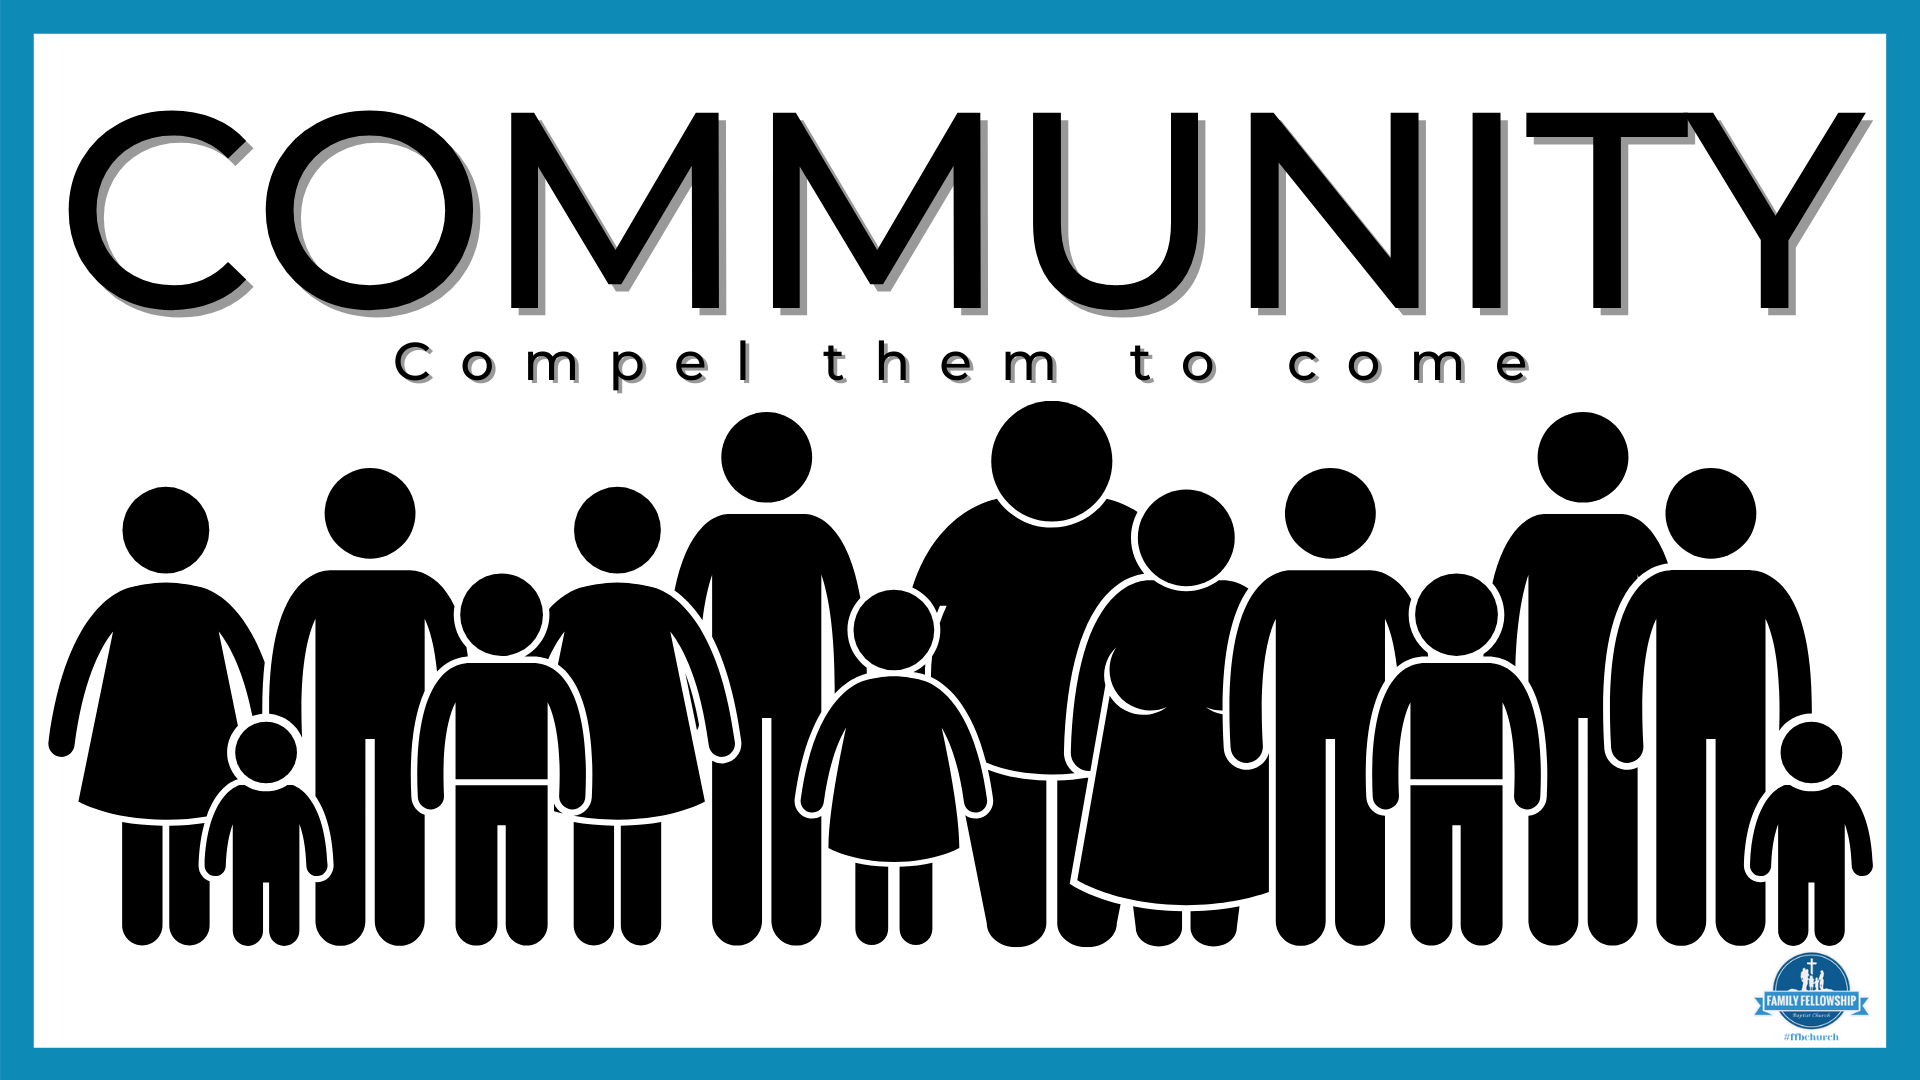 Sermon Community